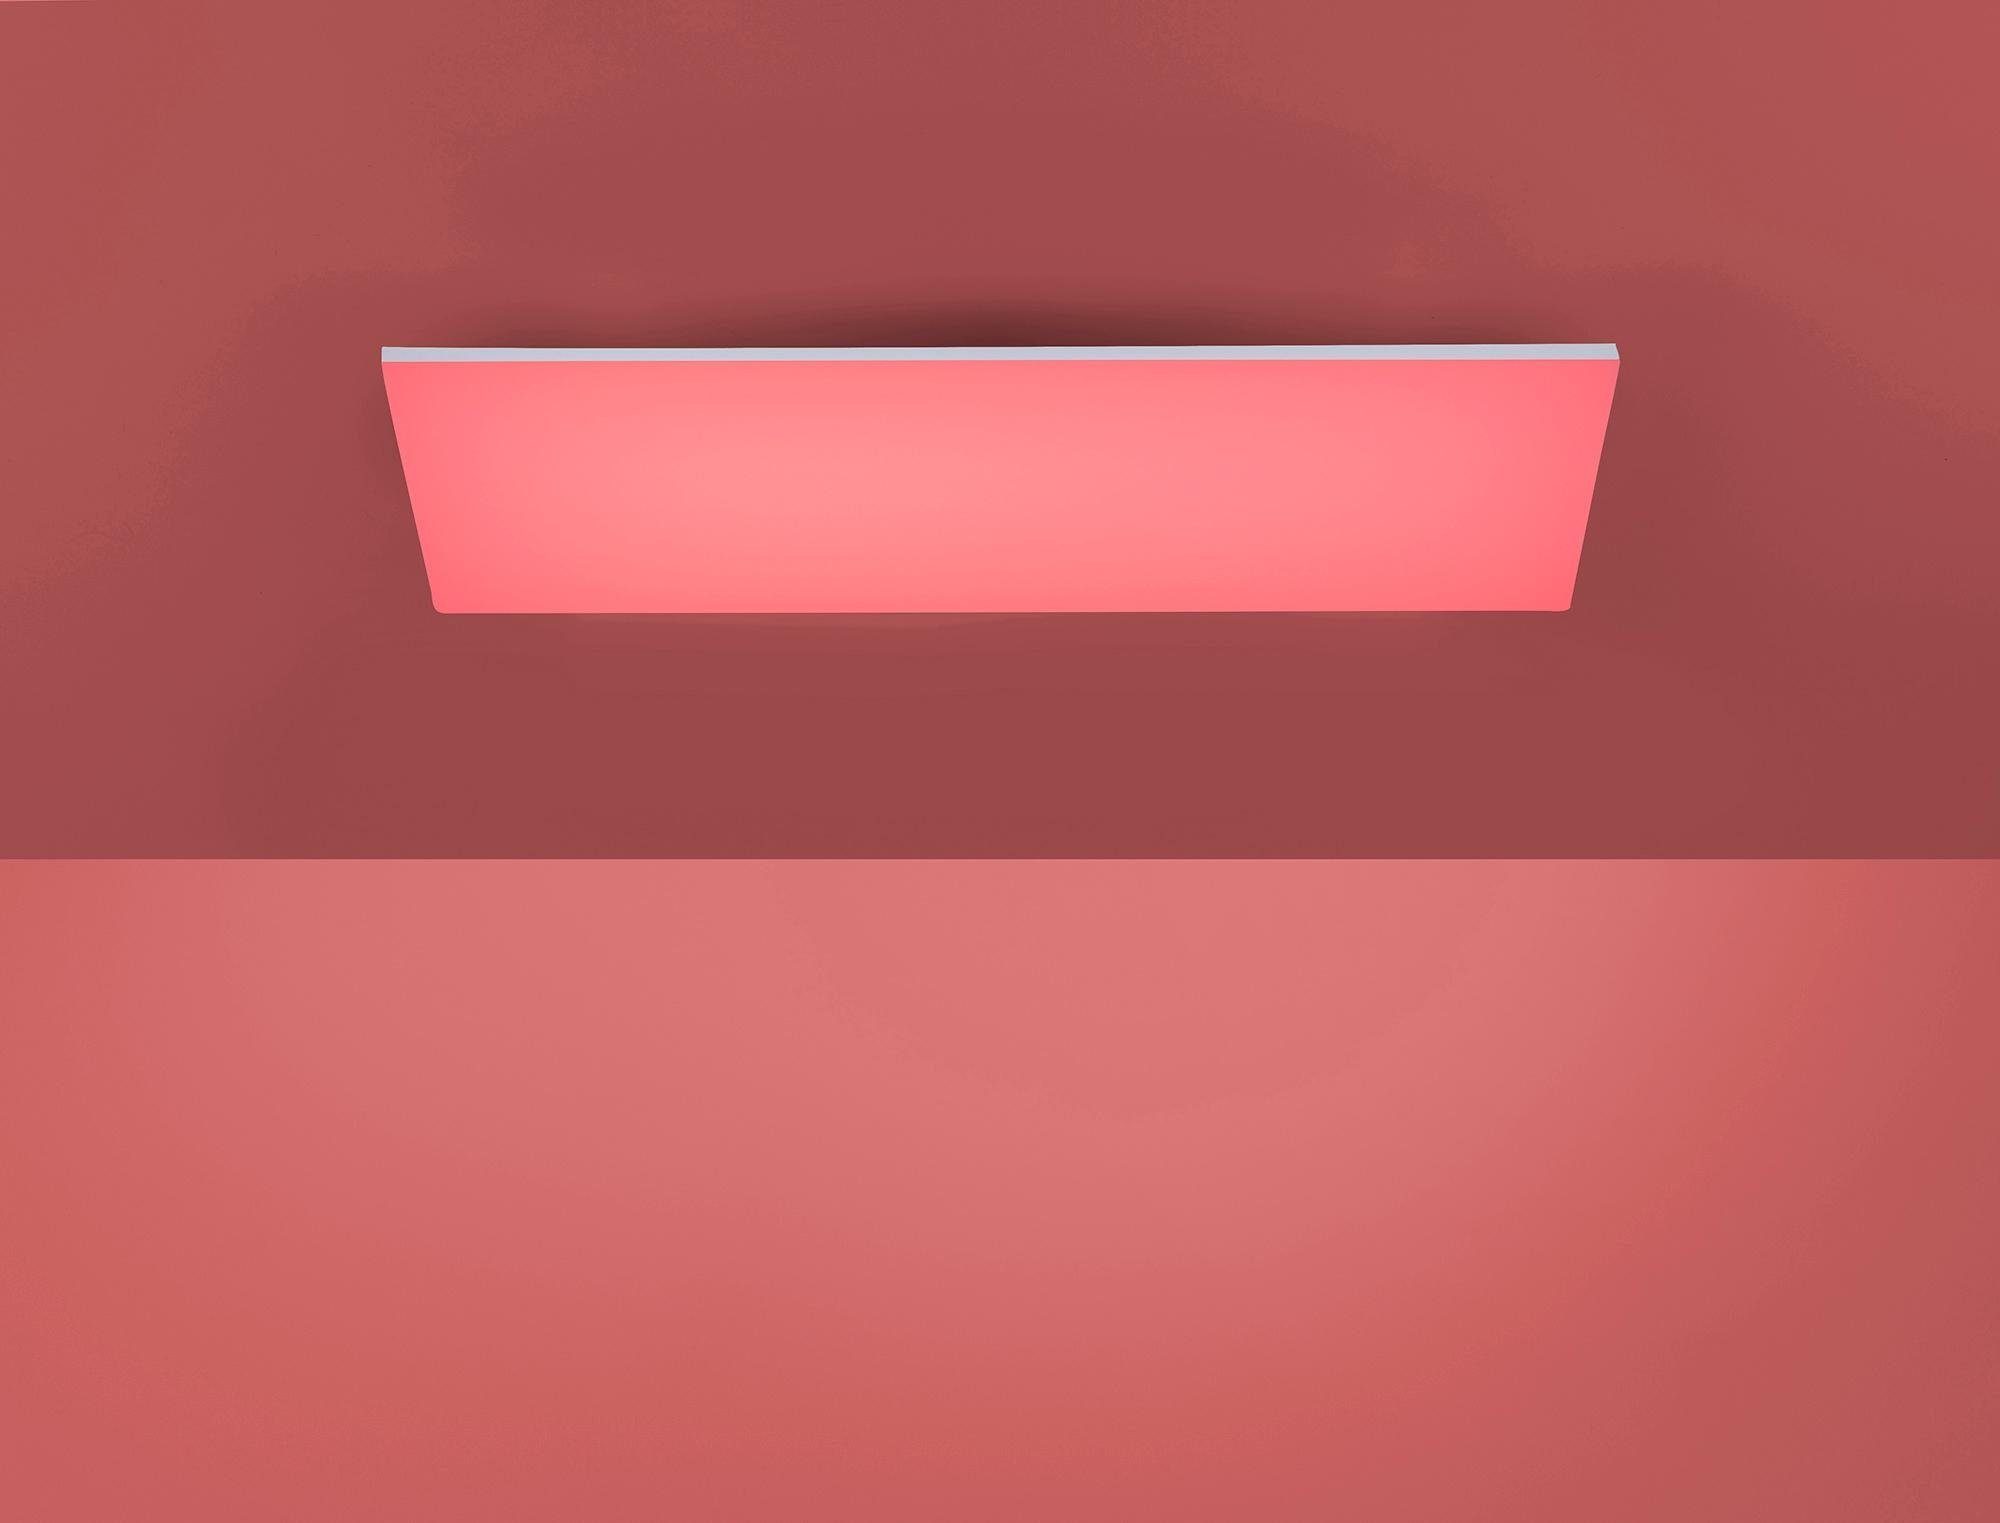 Paul Neuhaus Deckenleuchte FRAMELESS, Farbwechselfunktion integriert, warmweiß, LED Dimmfunktion, Farbwechsler, mit Memoryfunktion, fest Fernbed. Farbwechsel, (RGB), Dimmbar rahmenlos, Warmweiß